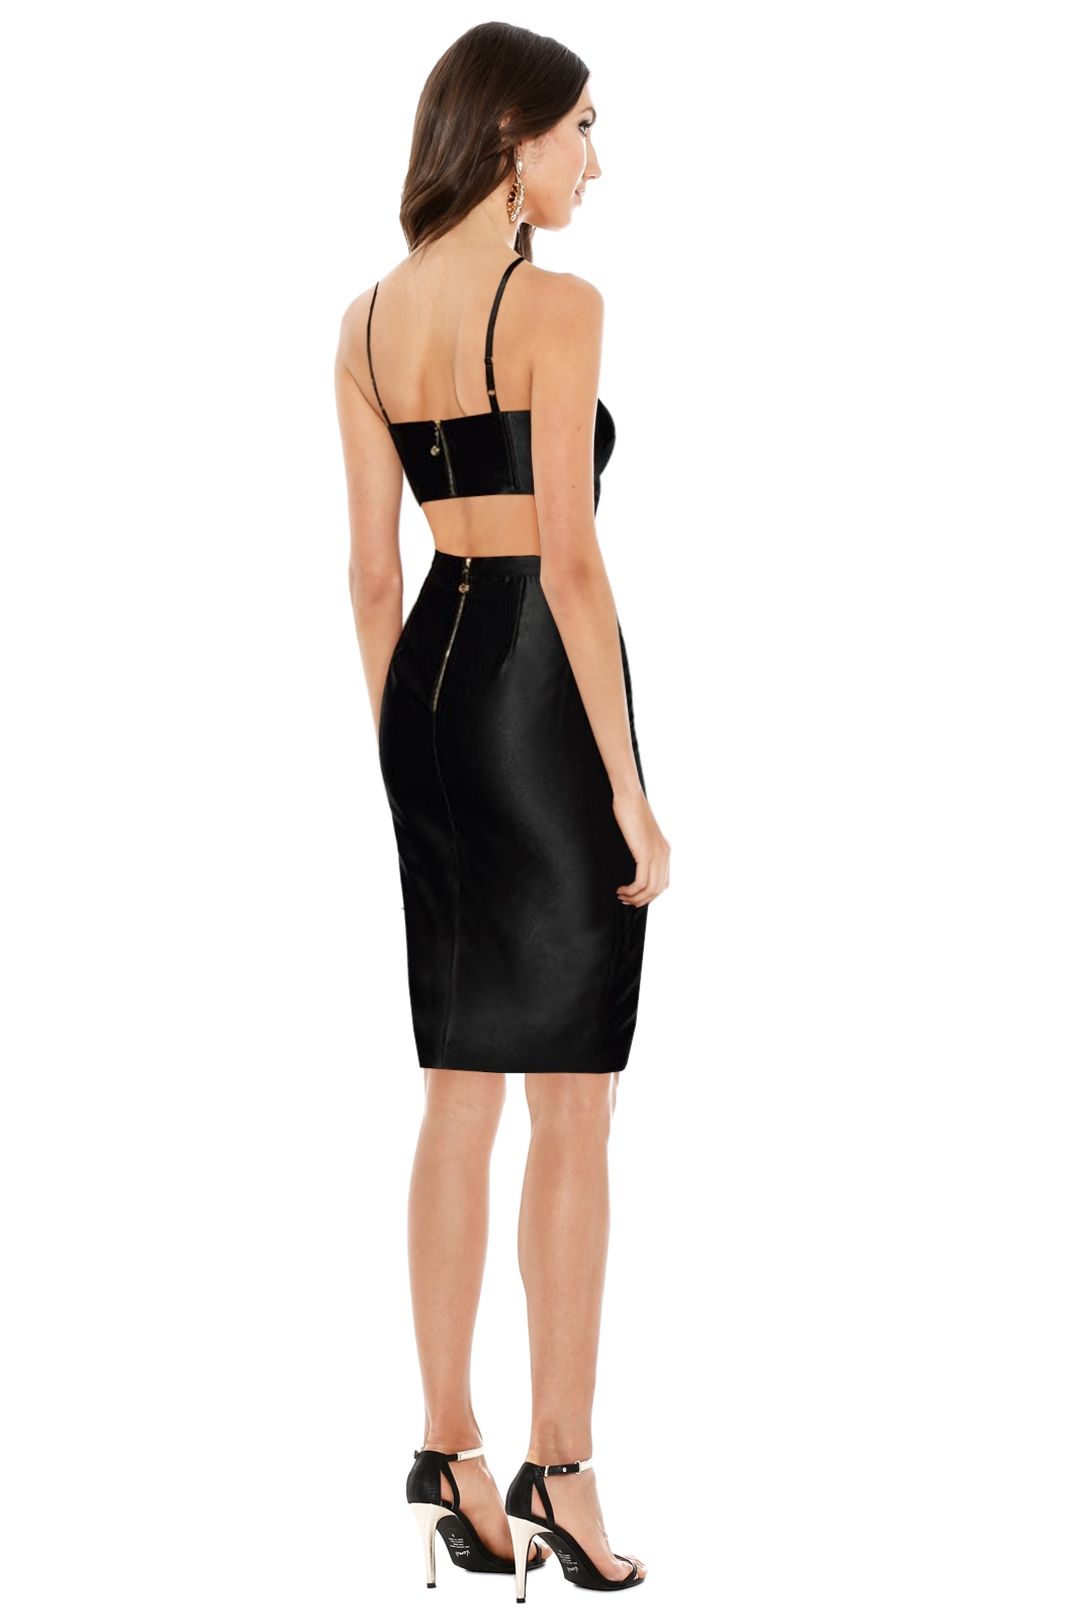 Misha Collection - Agata Bustier and Skirt Set - Black - Back